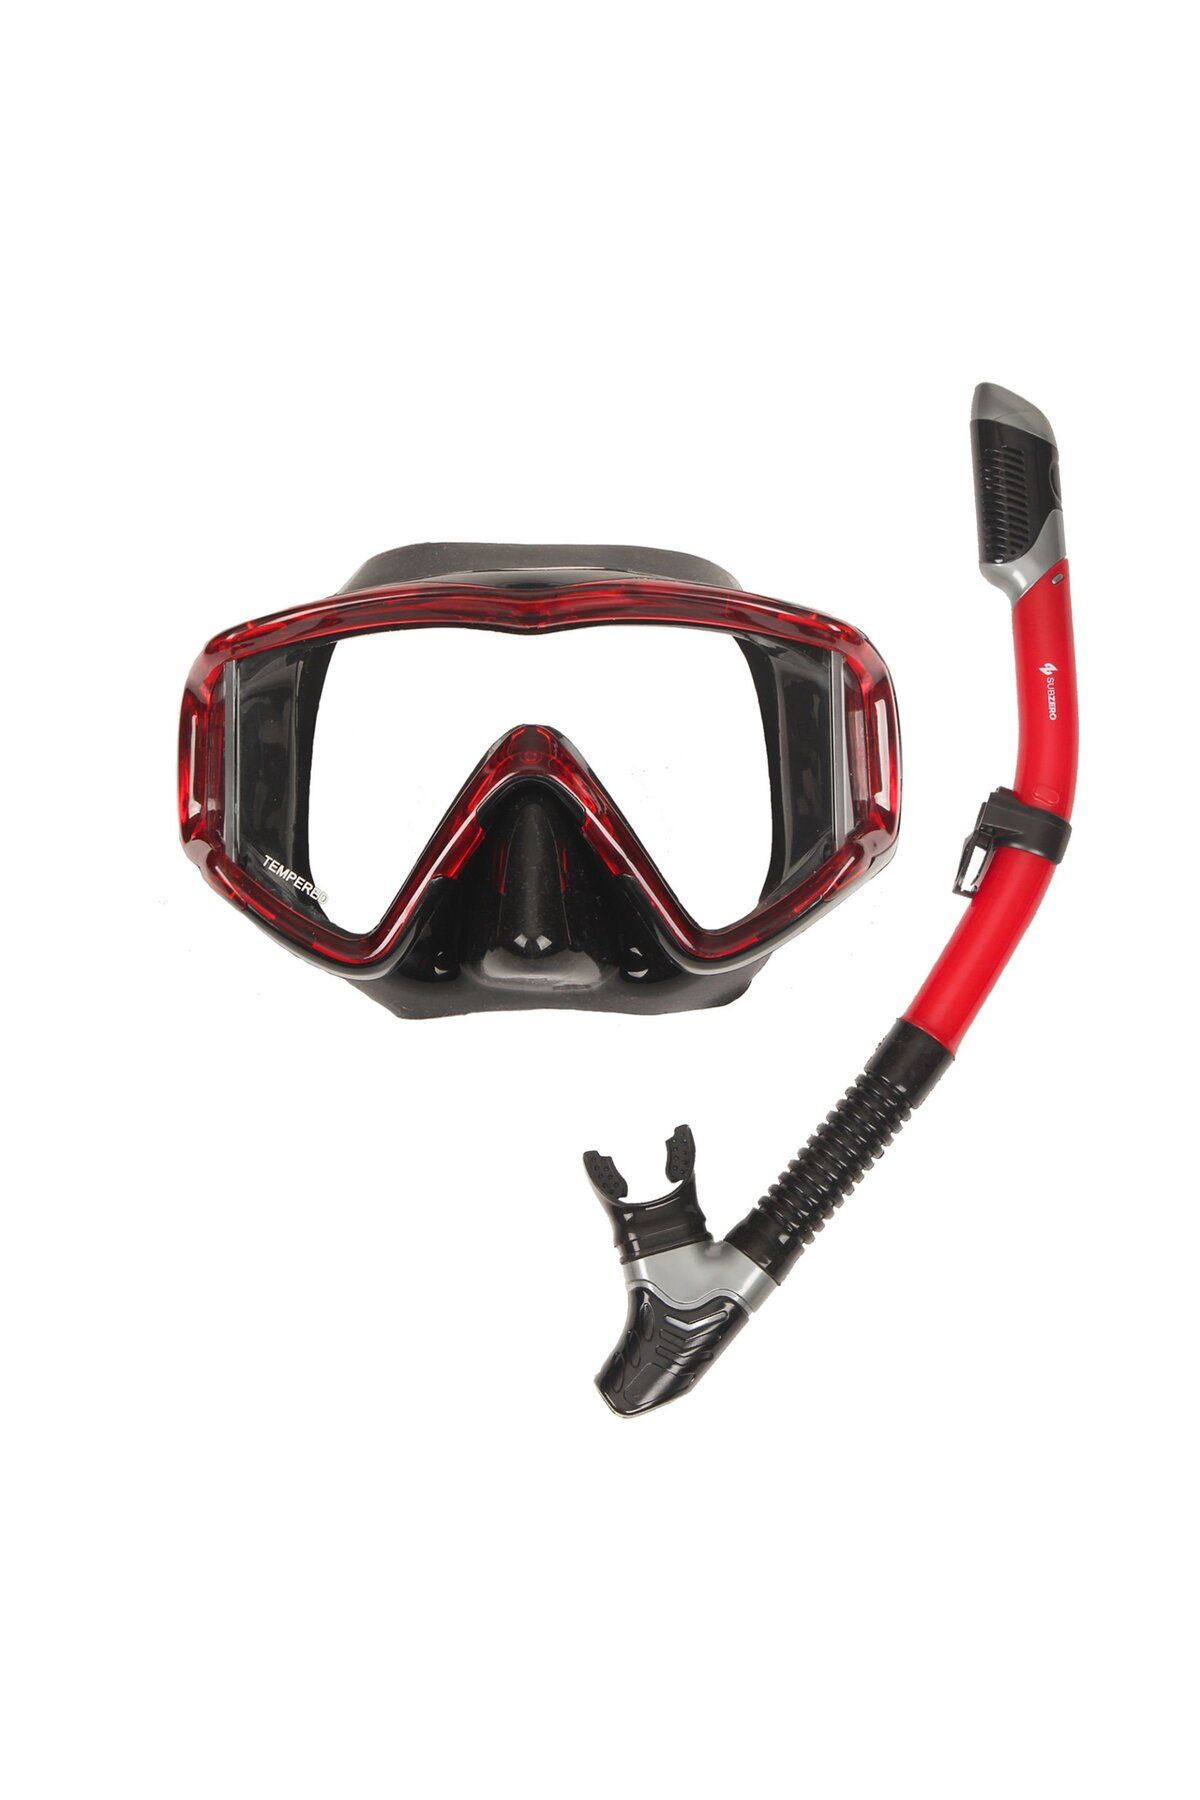 Subzero Code Maske Şnorkel Set - Kırmızı/siyah